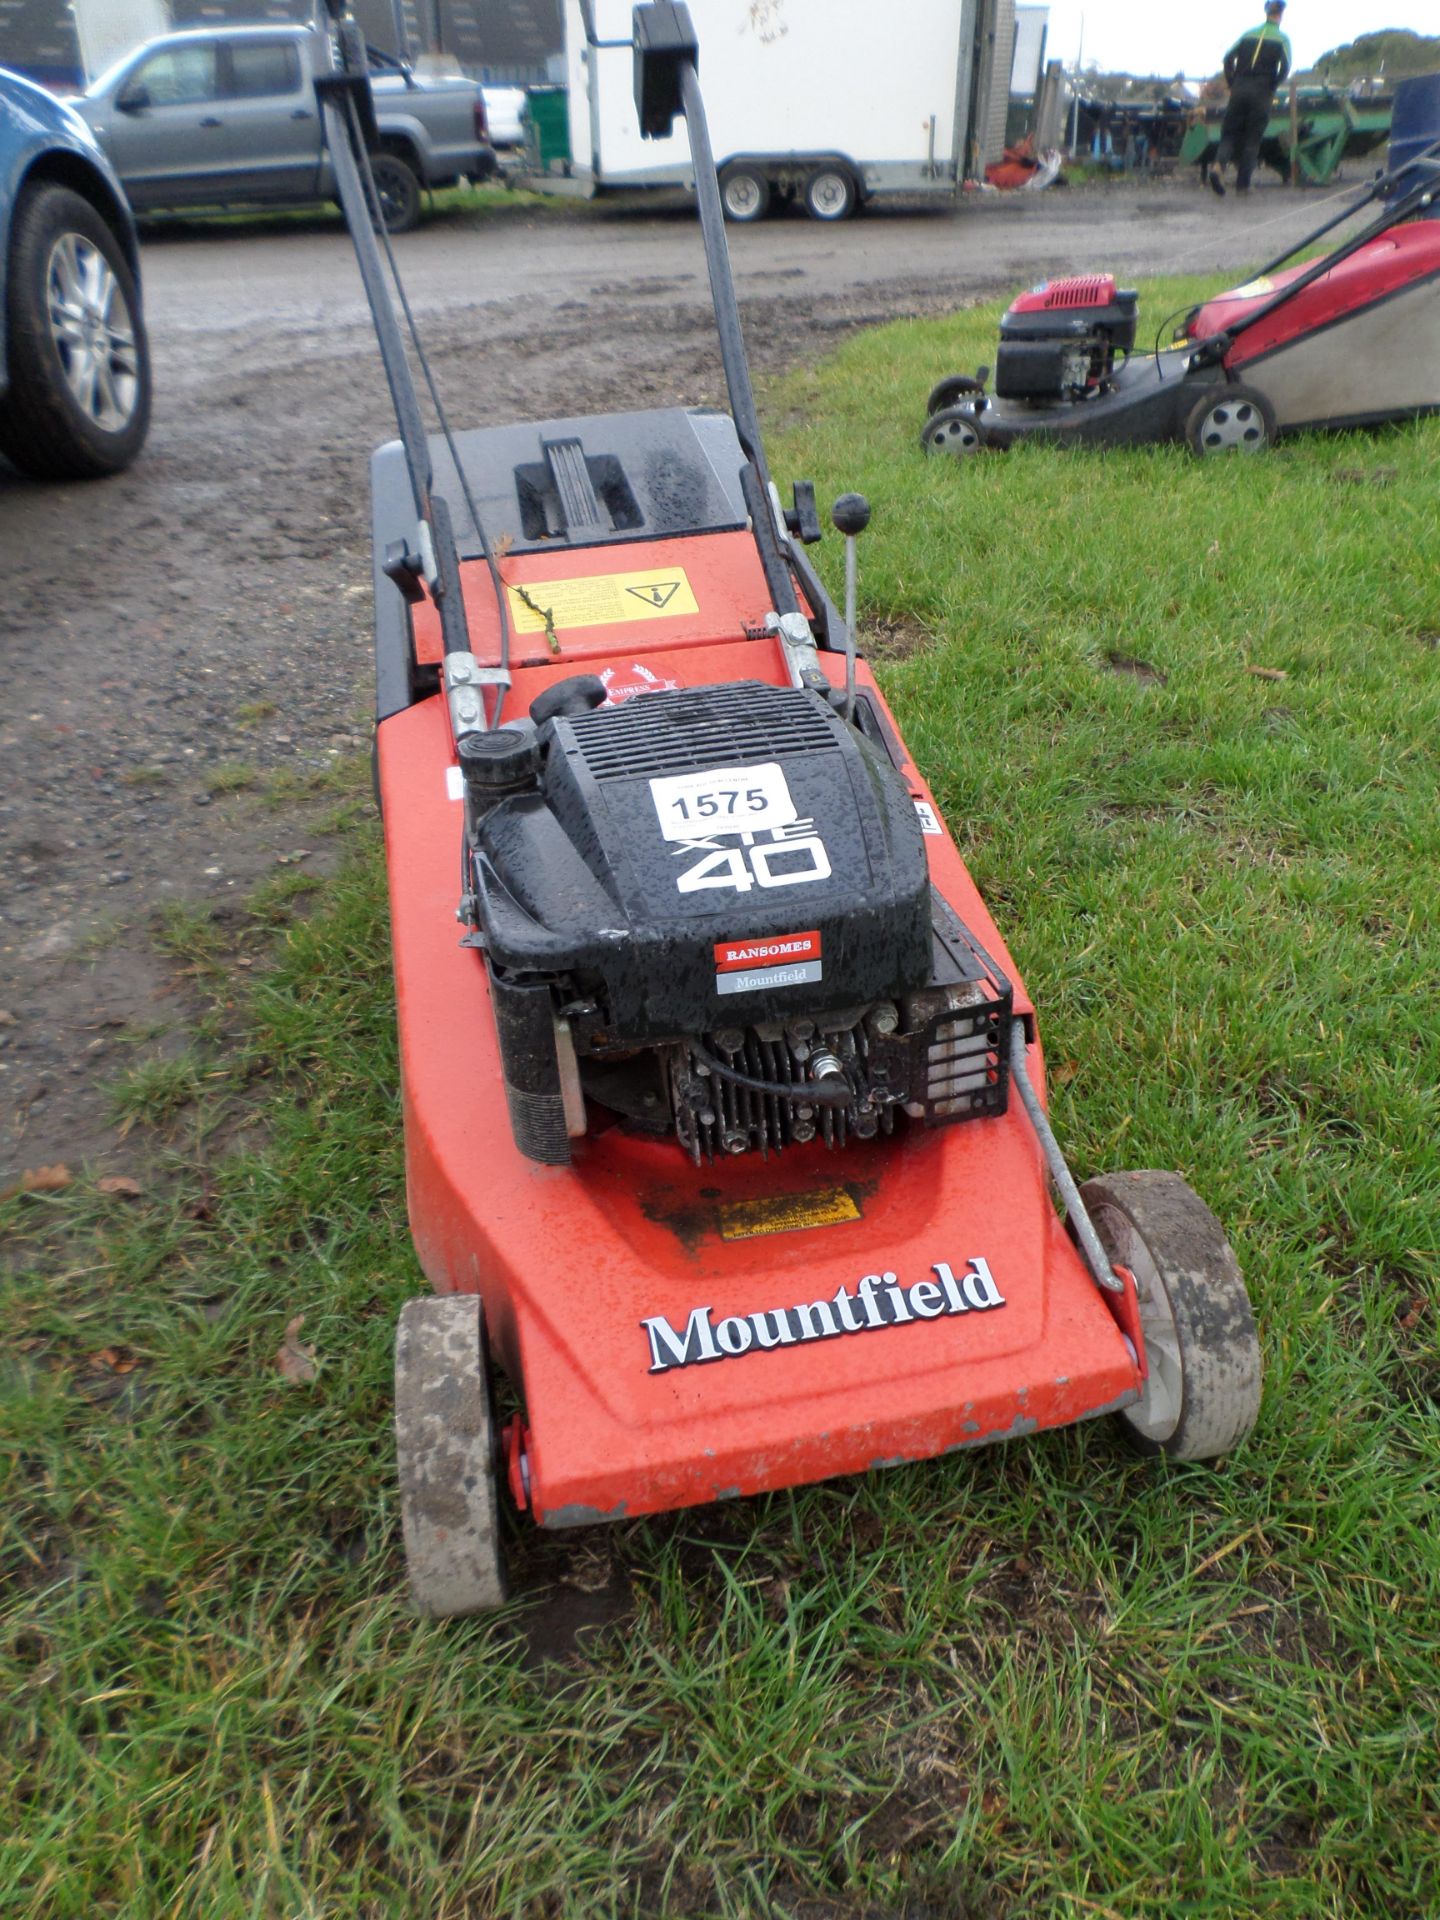 Mountfield petrol rotary mower with grass box